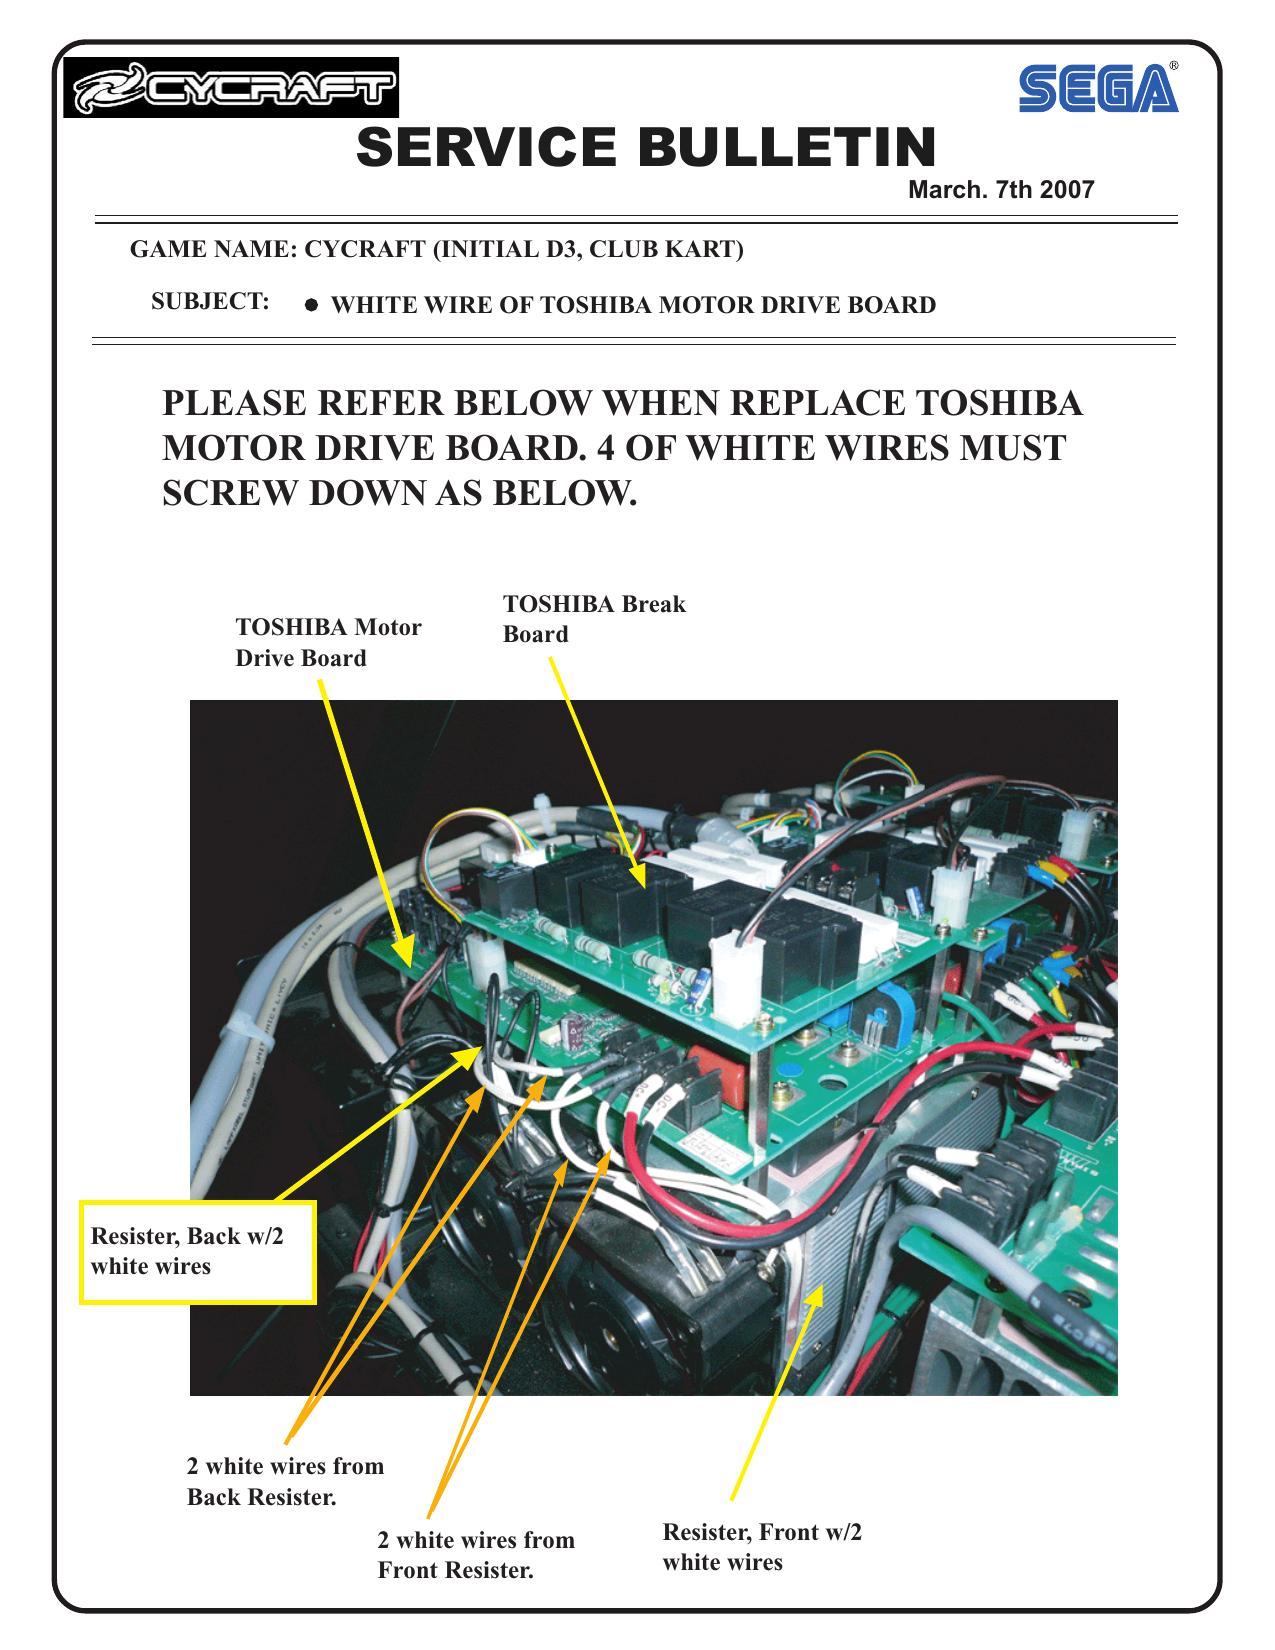 030707_SBulletin_Cycraft_wiring on Toshiba Motor Drive BD.pdf